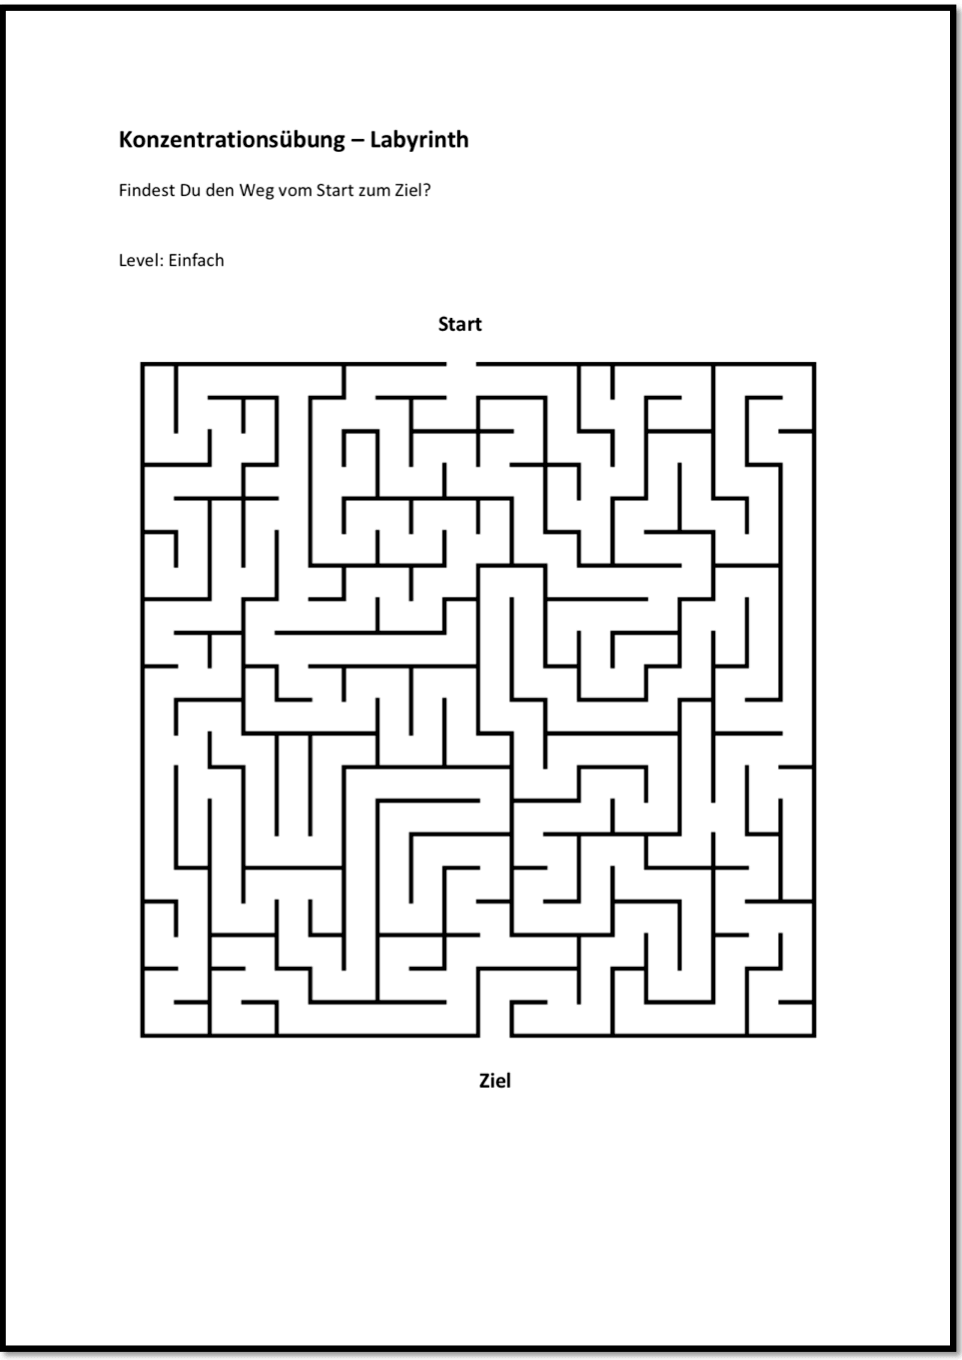 Konzentrationsübung Labyrinth